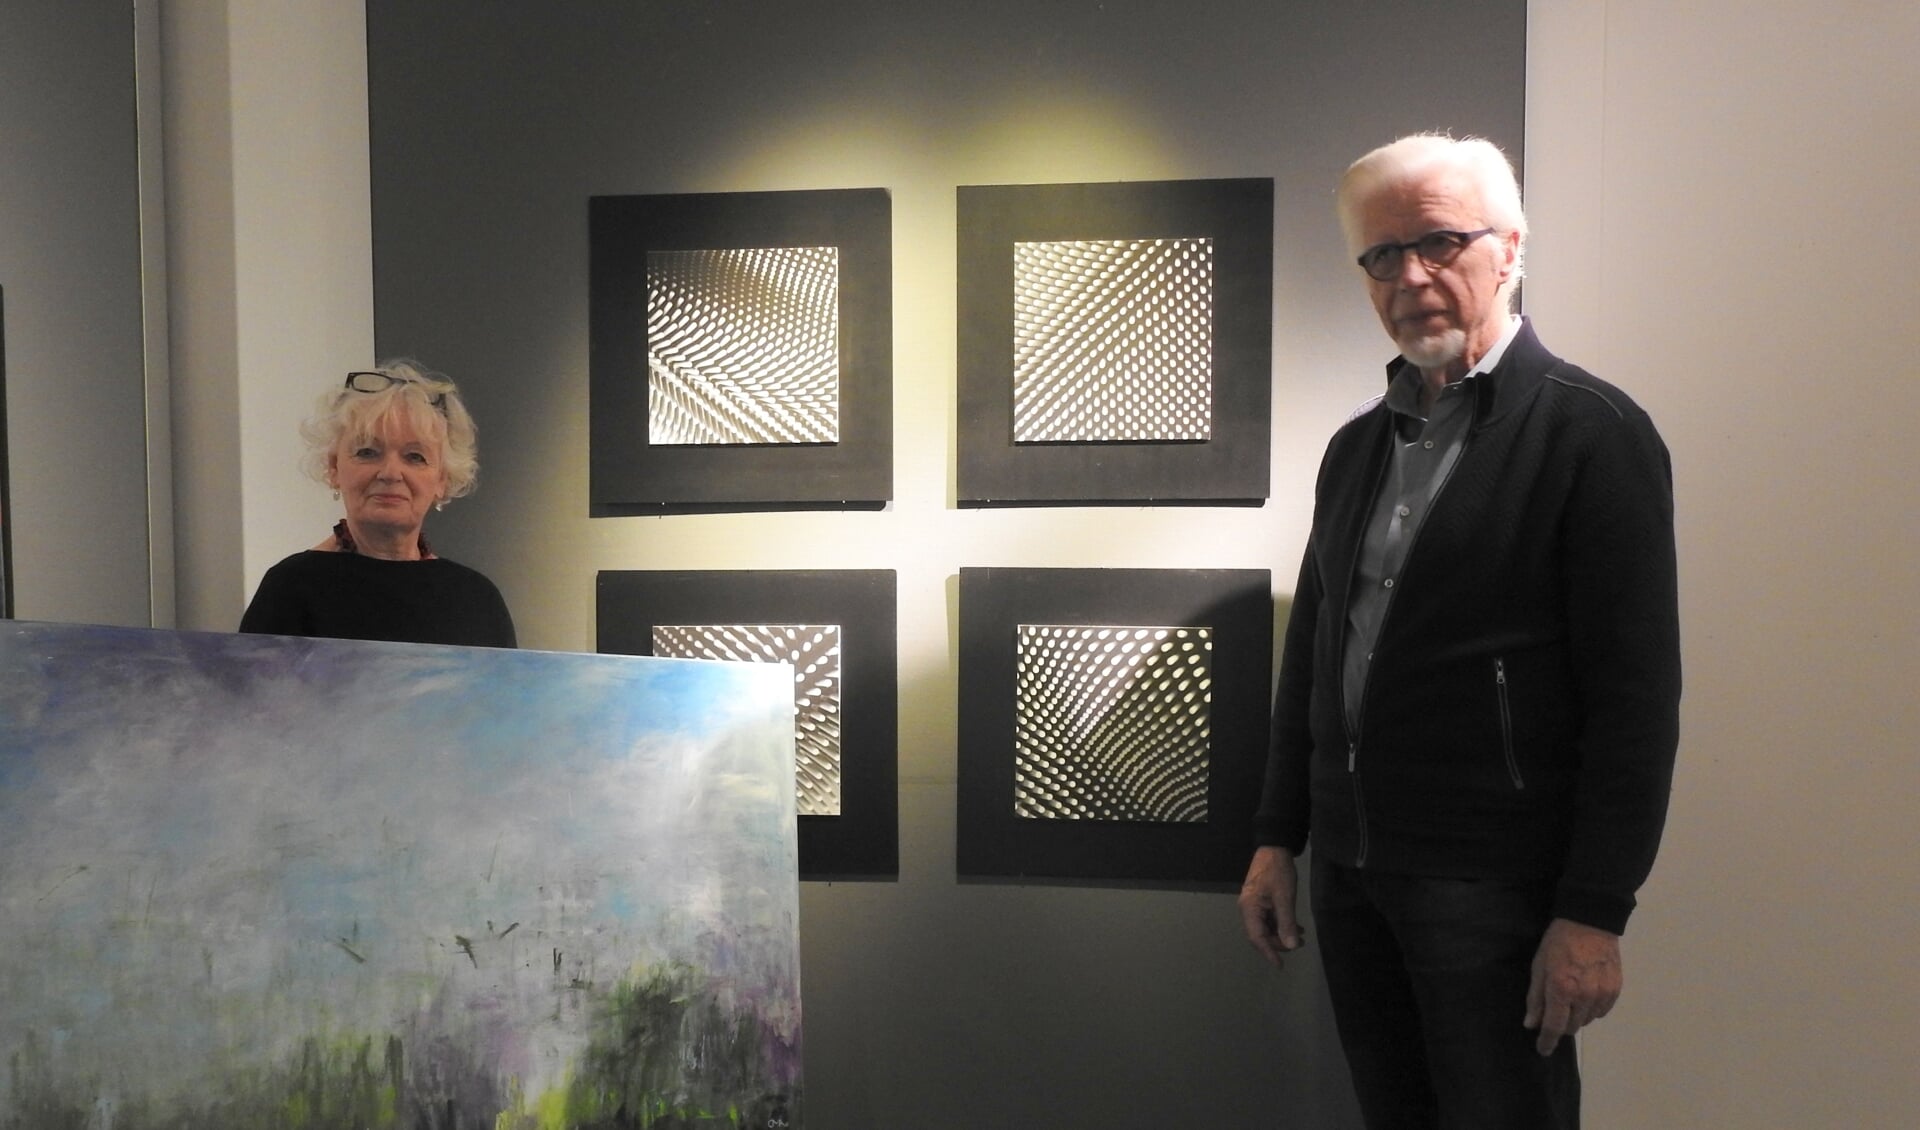 Carmen Milhous en Wim van den Berge exposeren samen.